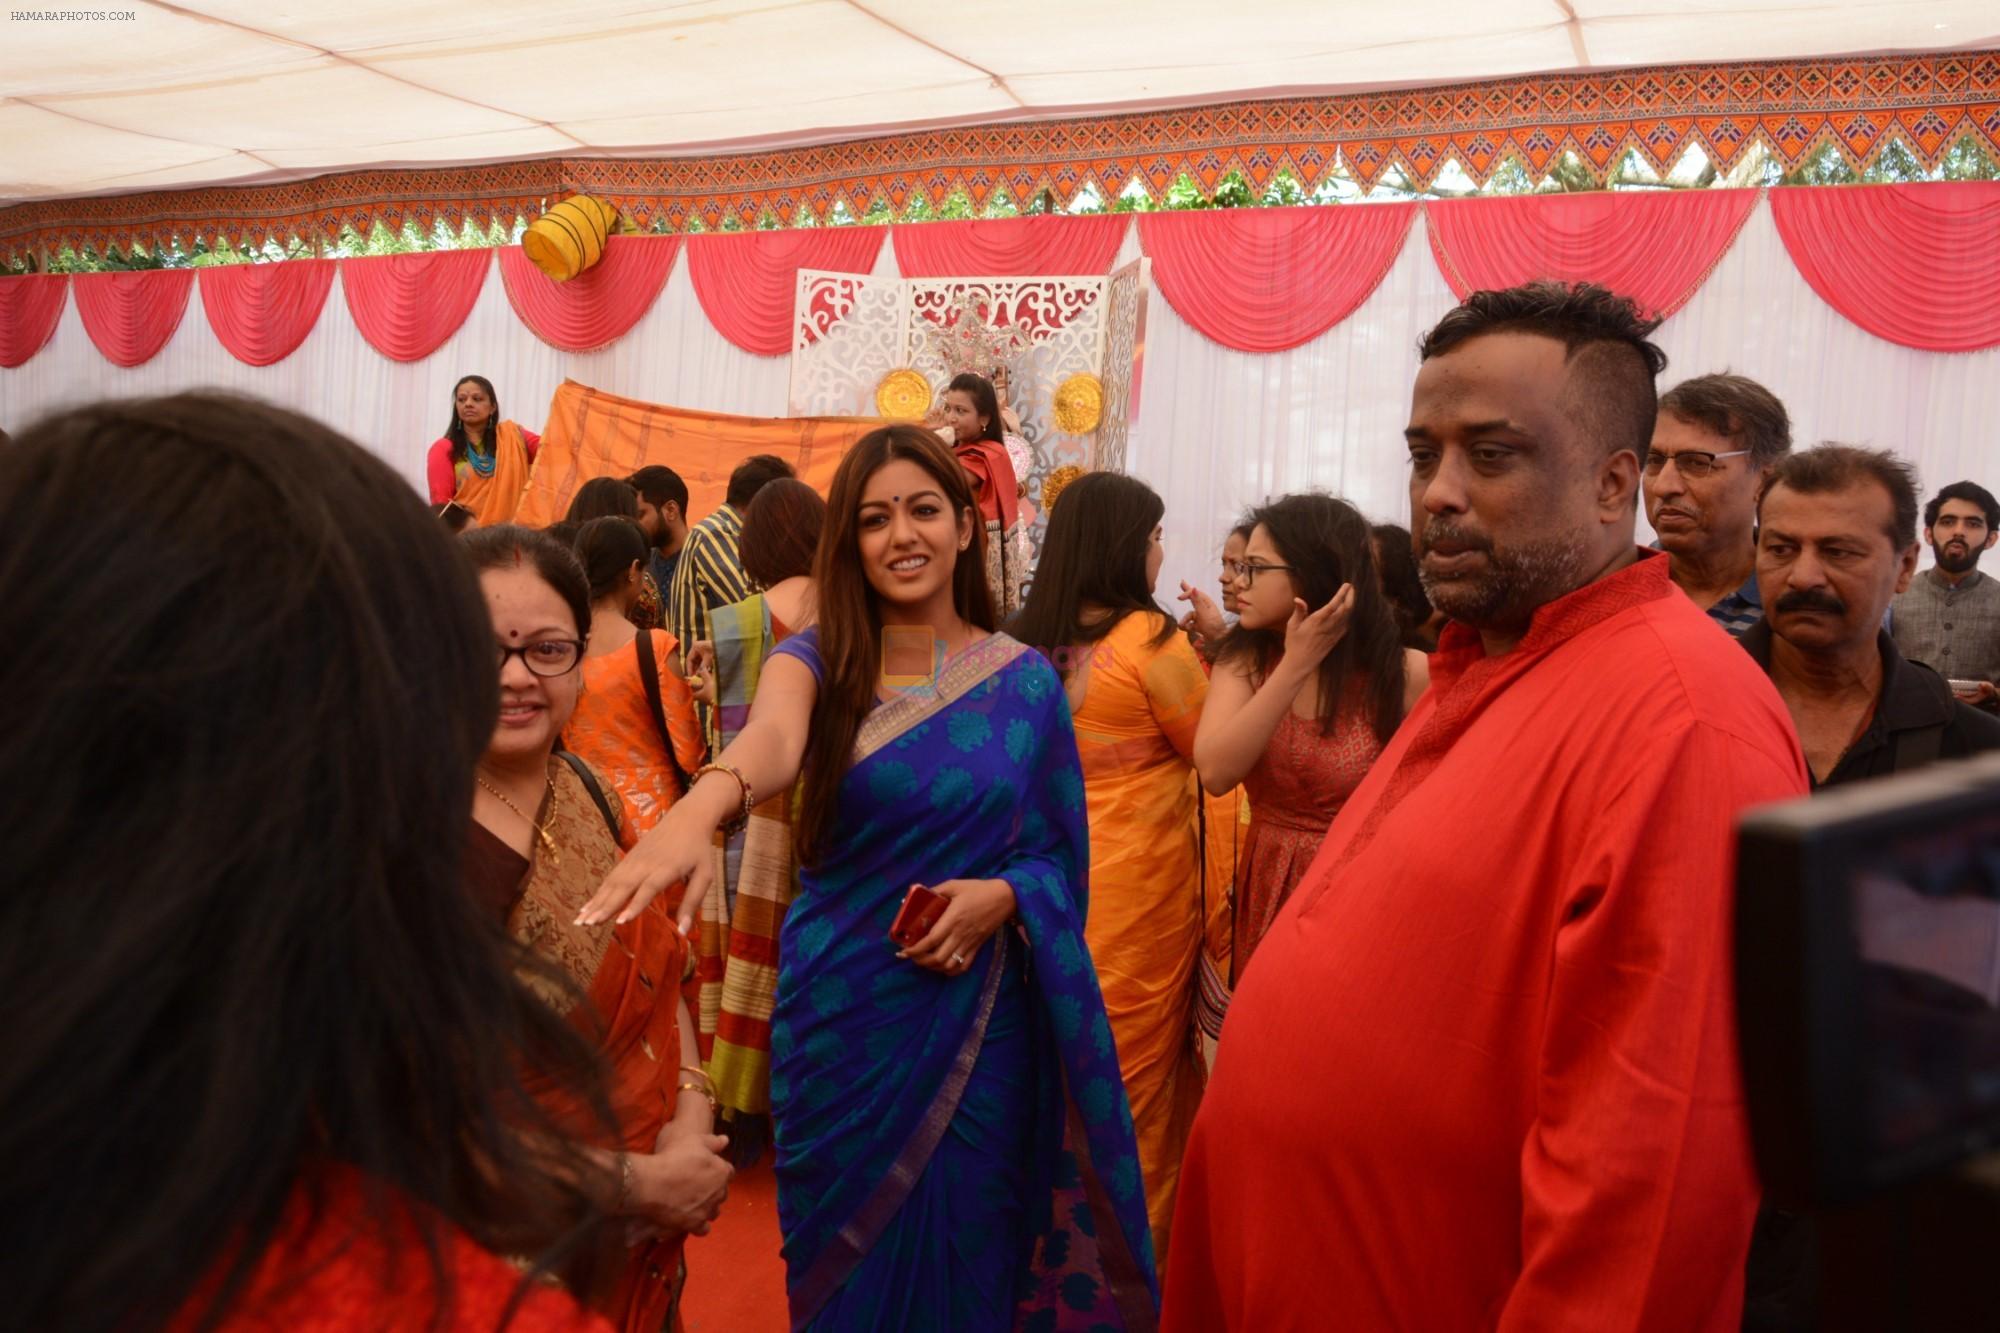 Ishita Dutta at Saraswati pujan at Anurag Basu's house in goregaon on 10th Feb 2019